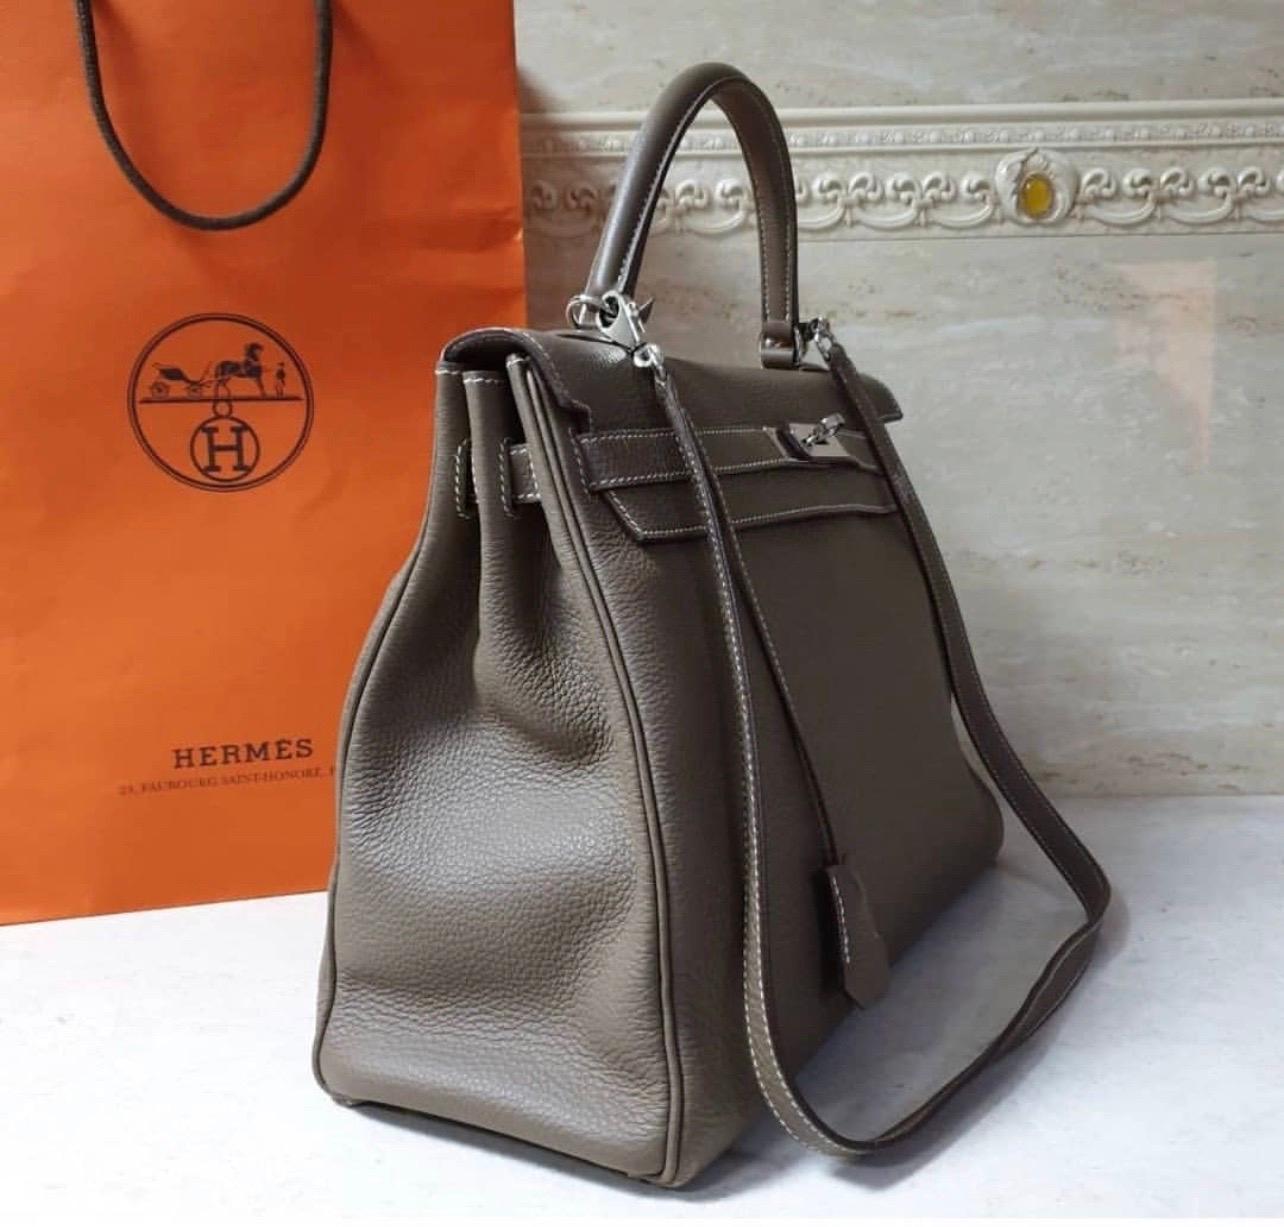 Gray Hermes Kelly 35 Leather Handbag.